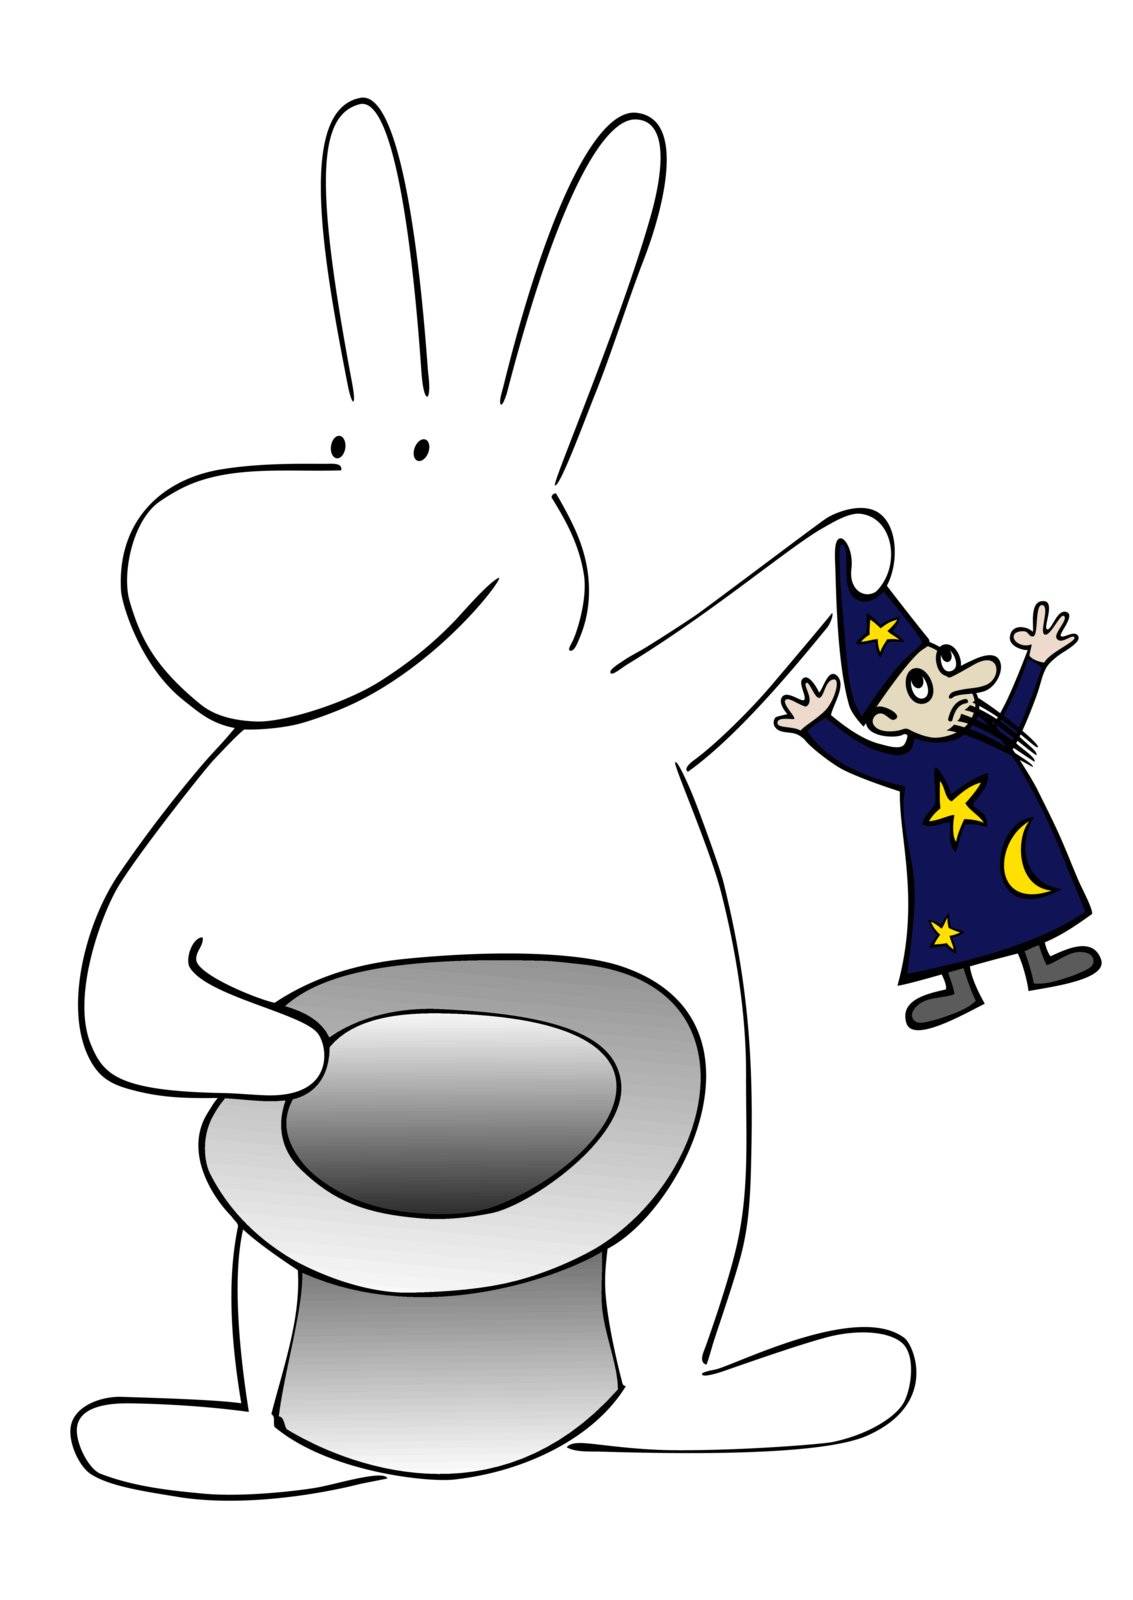 cartoon illustration - rabbit and magician - paradoxical situation